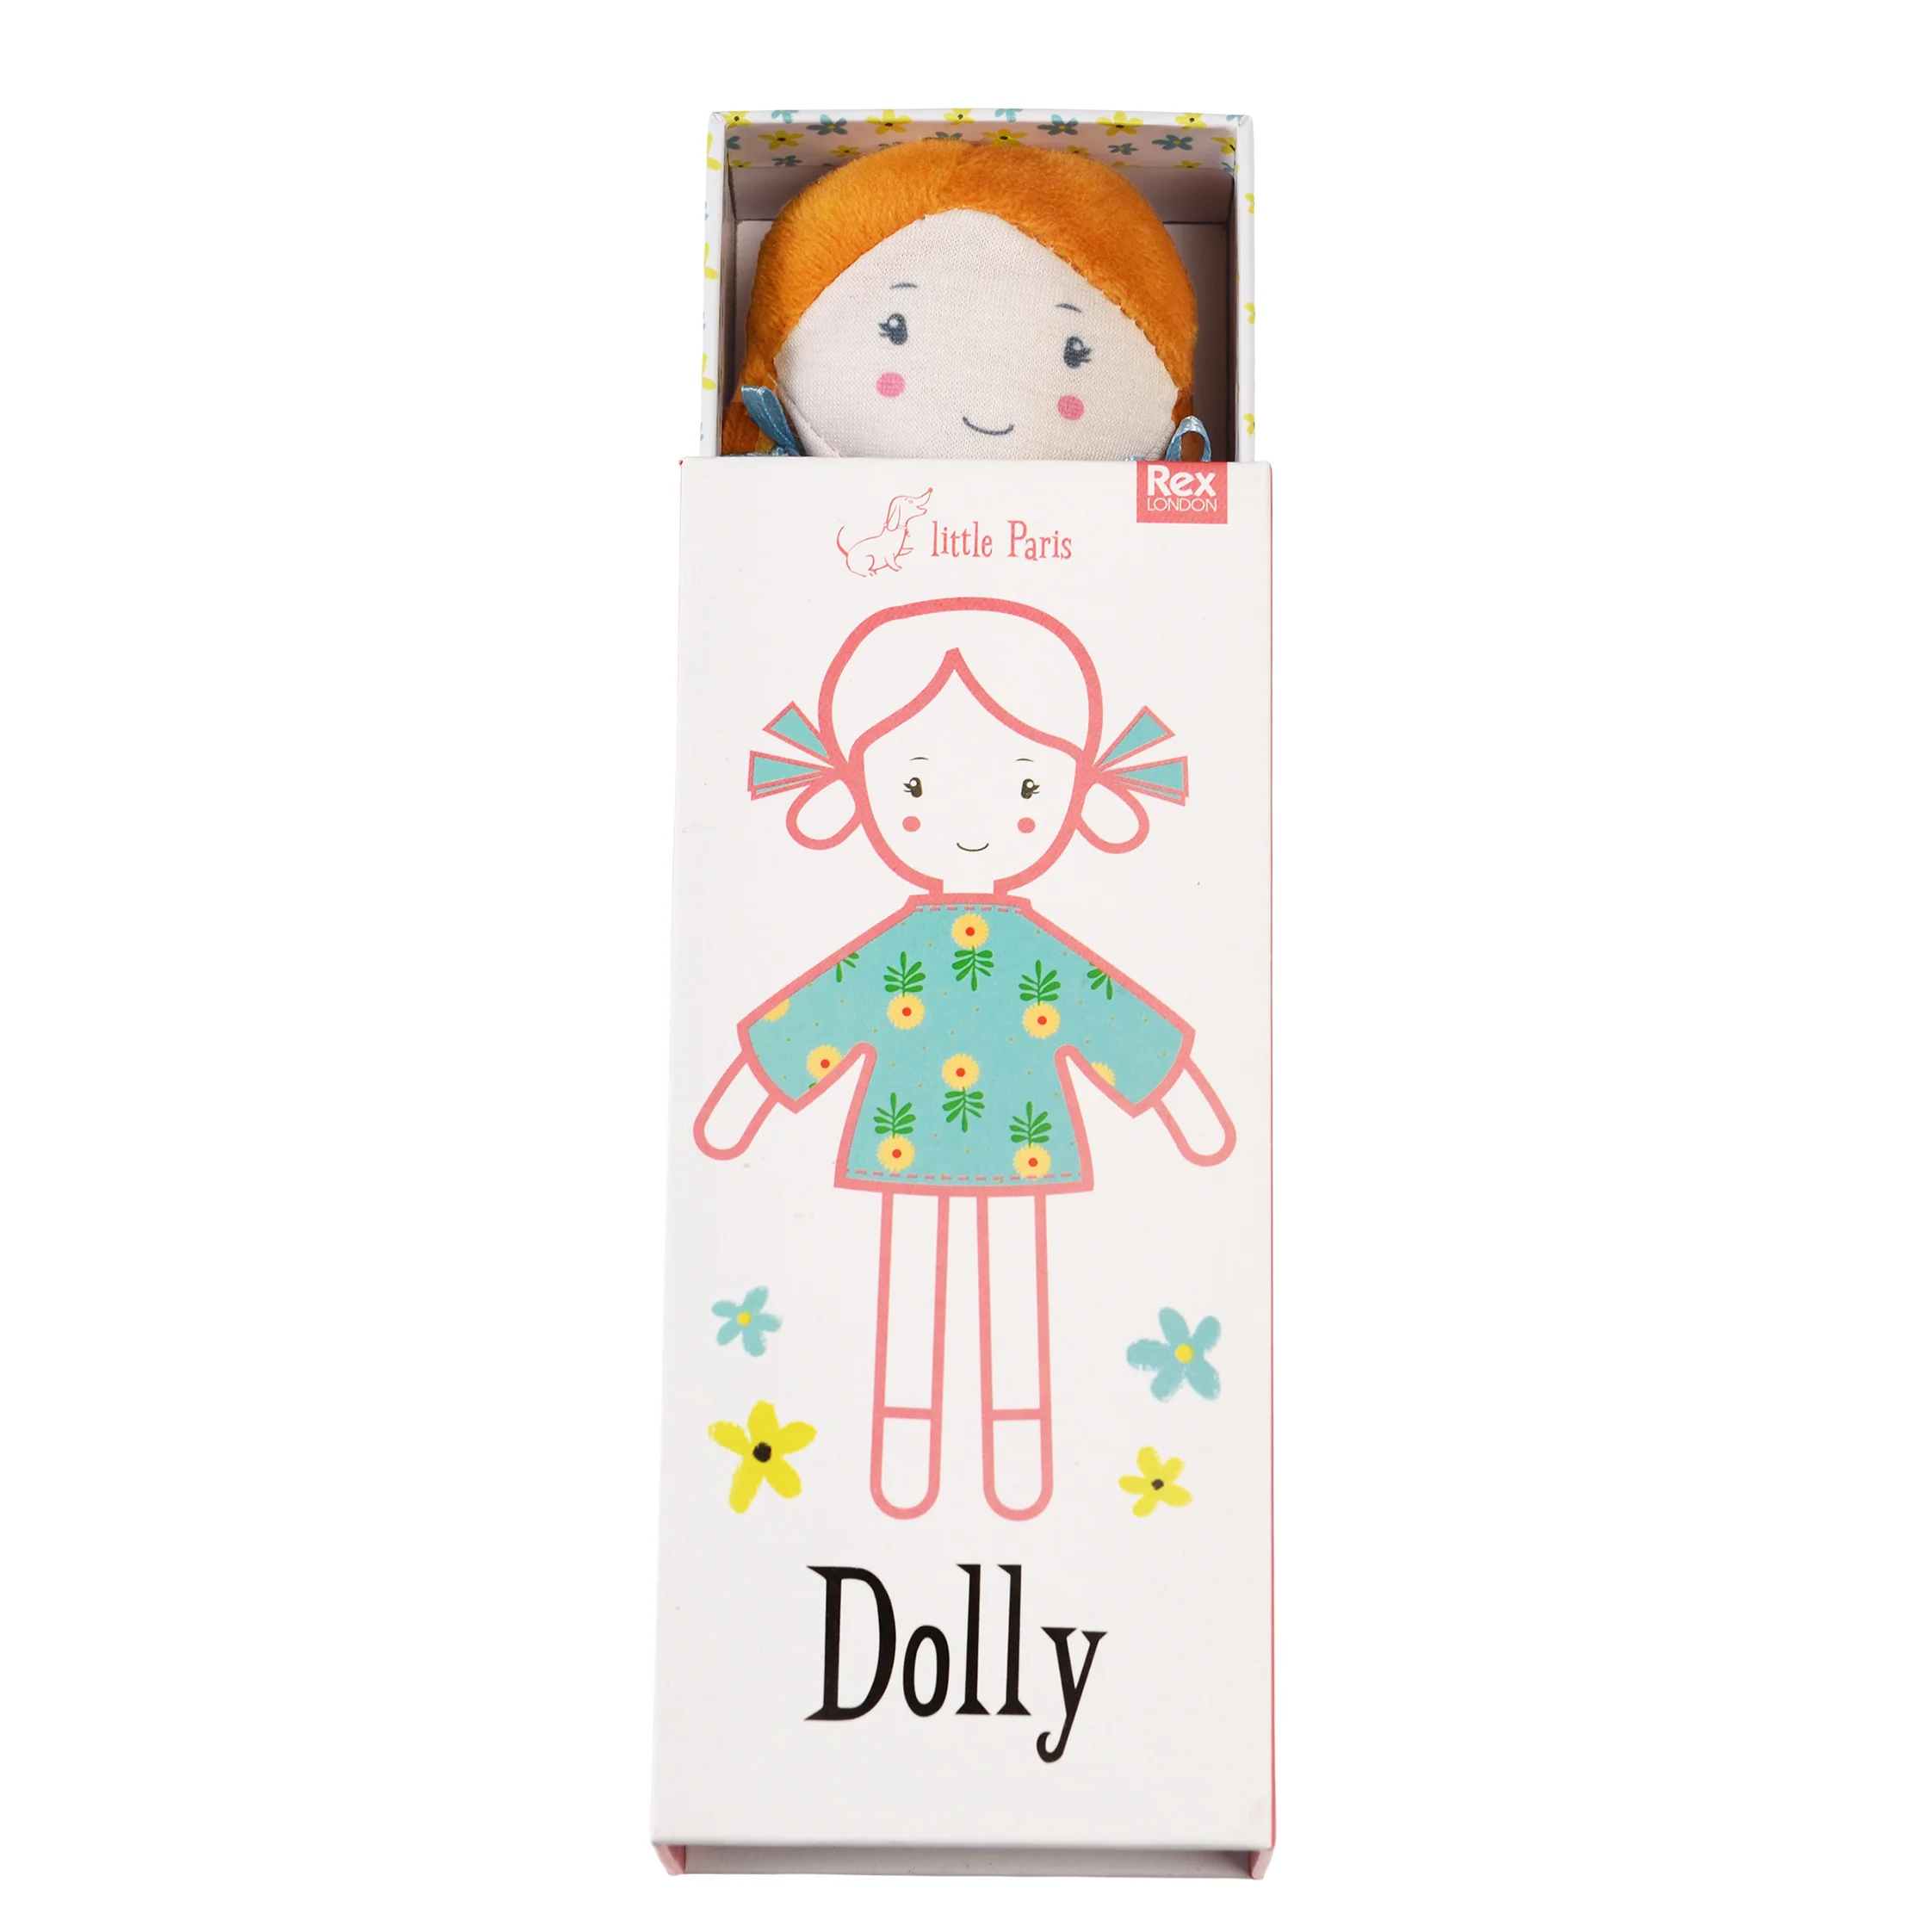 dolly in a box - little paris